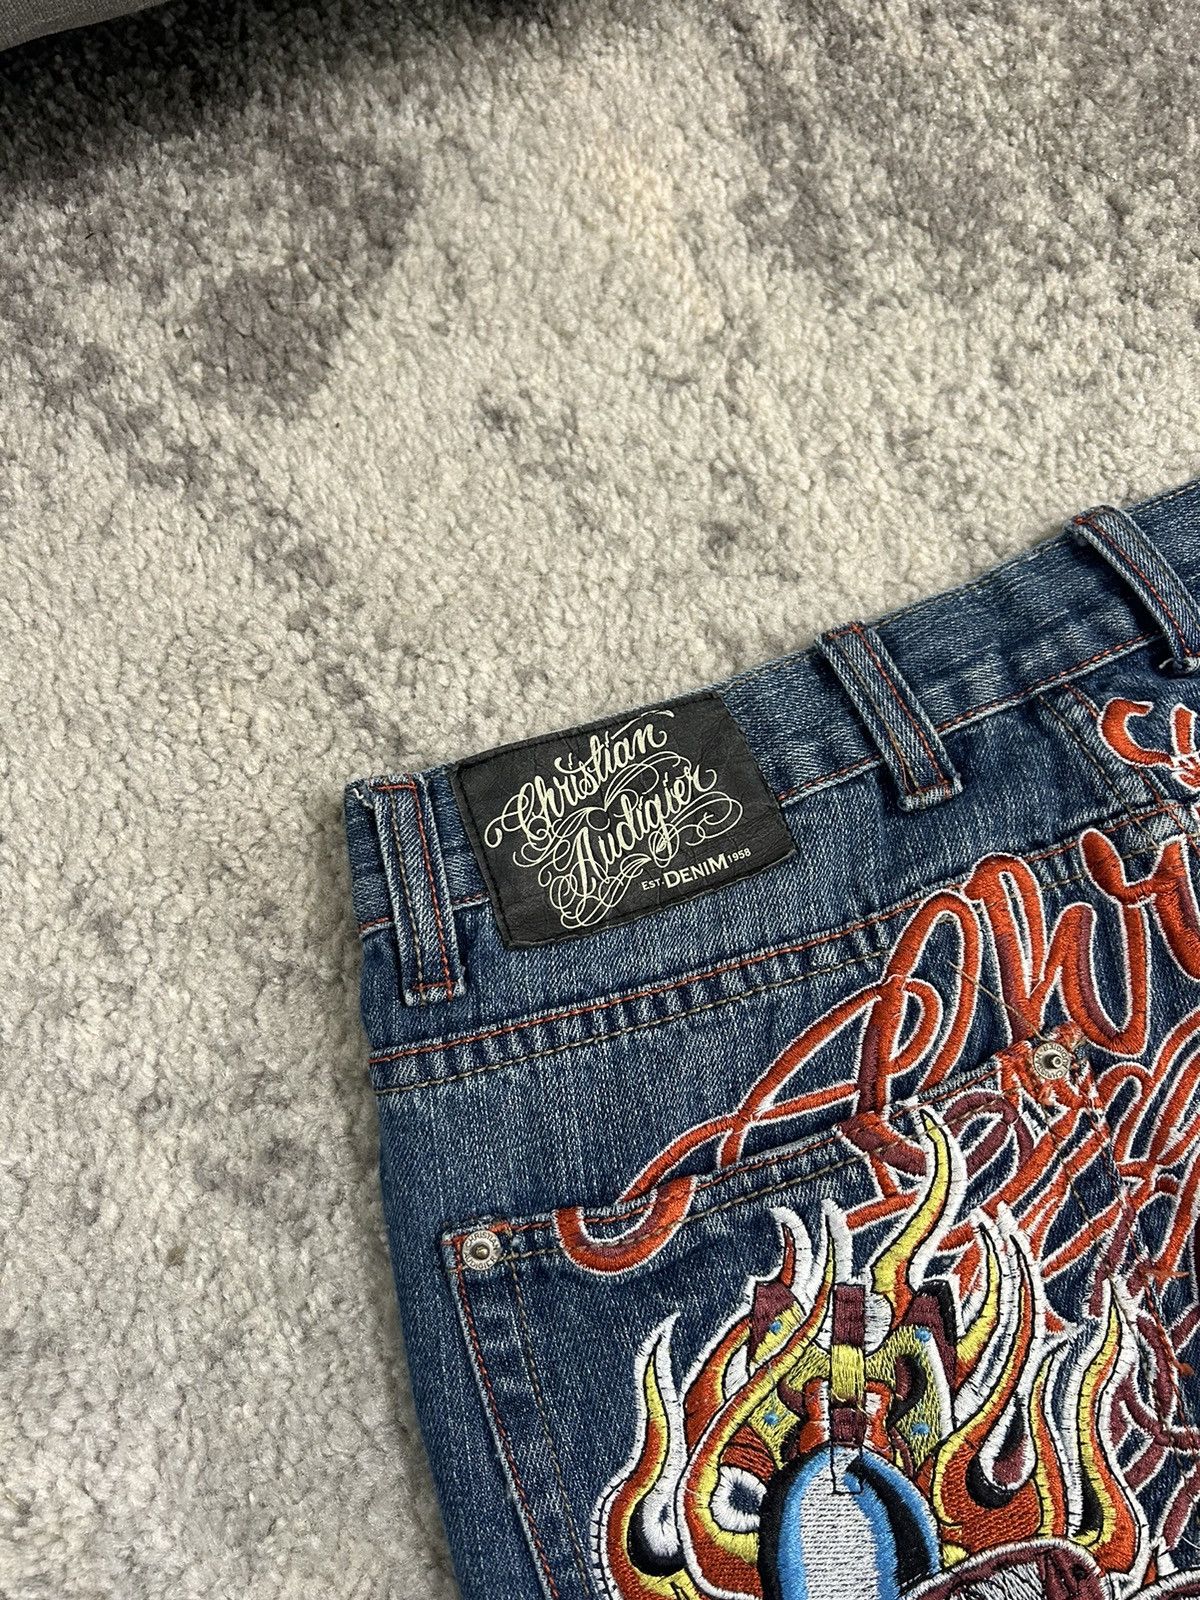 Christian Audigier 2000s Christian Audigier Embroidered Jeans Size US 34 / EU 50 - 8 Thumbnail